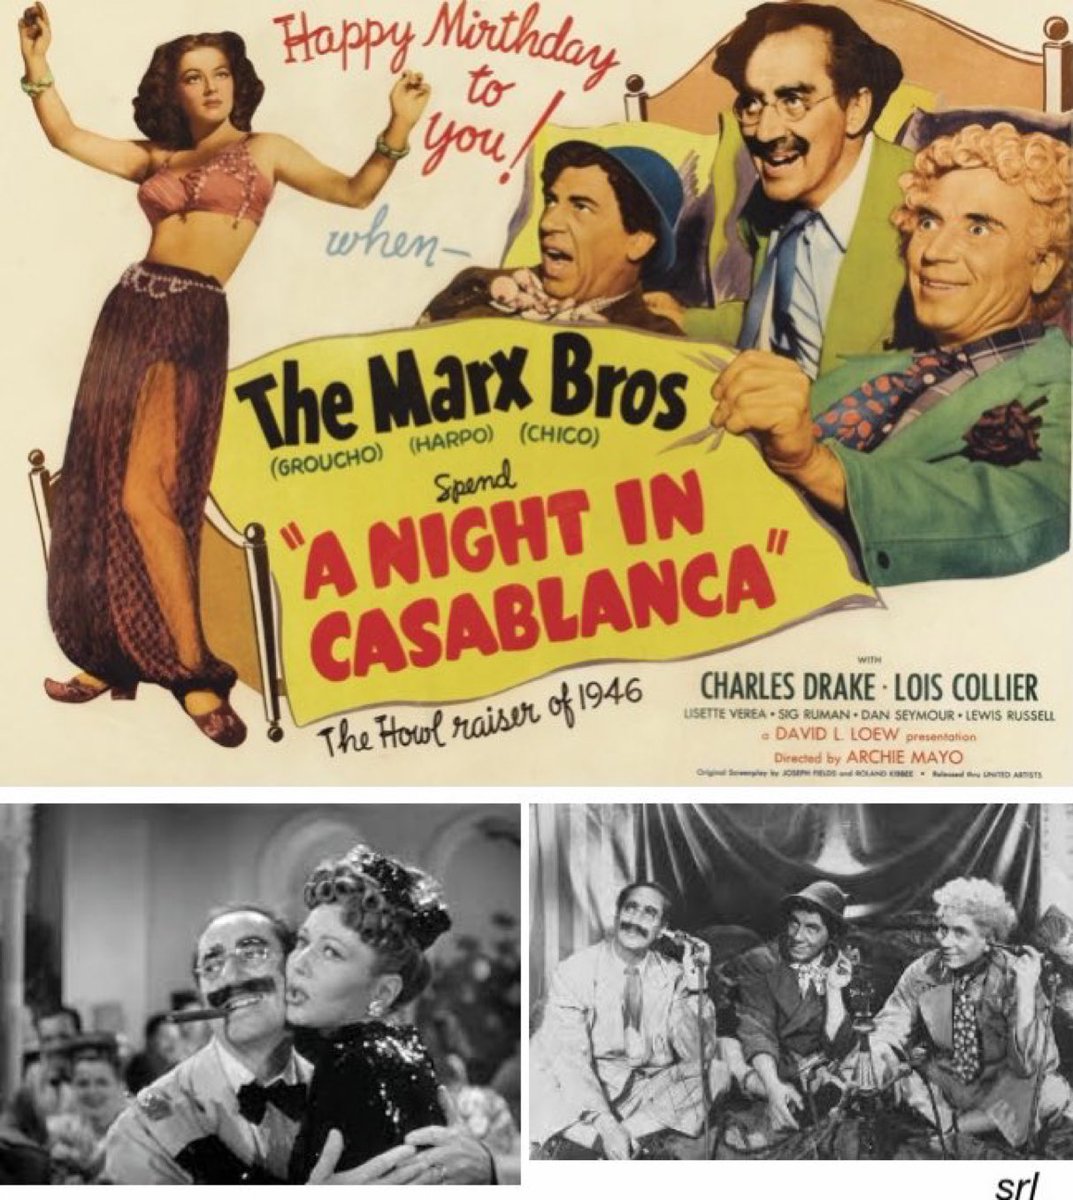 1:15pm TODAY on @TalkingPicsTV 👉joint #TVFilmOfTheDay The 1946 #MarxBrothers #Comedy film🎥 “A Night in Casablanca” directed by #ArchieMayo and written by #JosephFields & #RolandKibbee 🌟#GrouchoMarx #HarpoMarx #ChicoMarx #CharlesDrake #LoisCollier #SigRuman #LisetteVerea